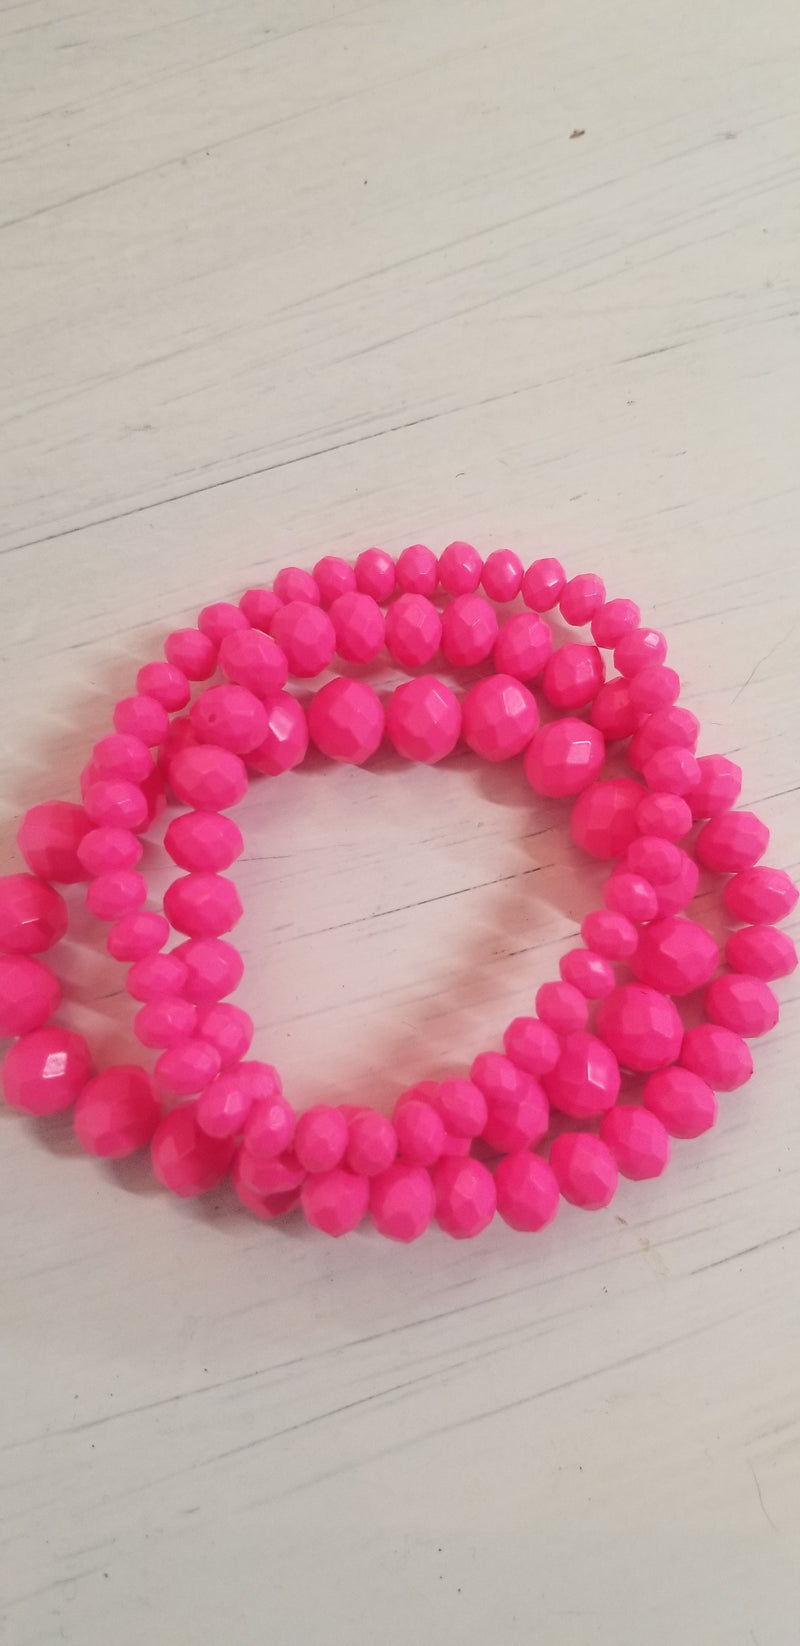 Pink bracelet collection